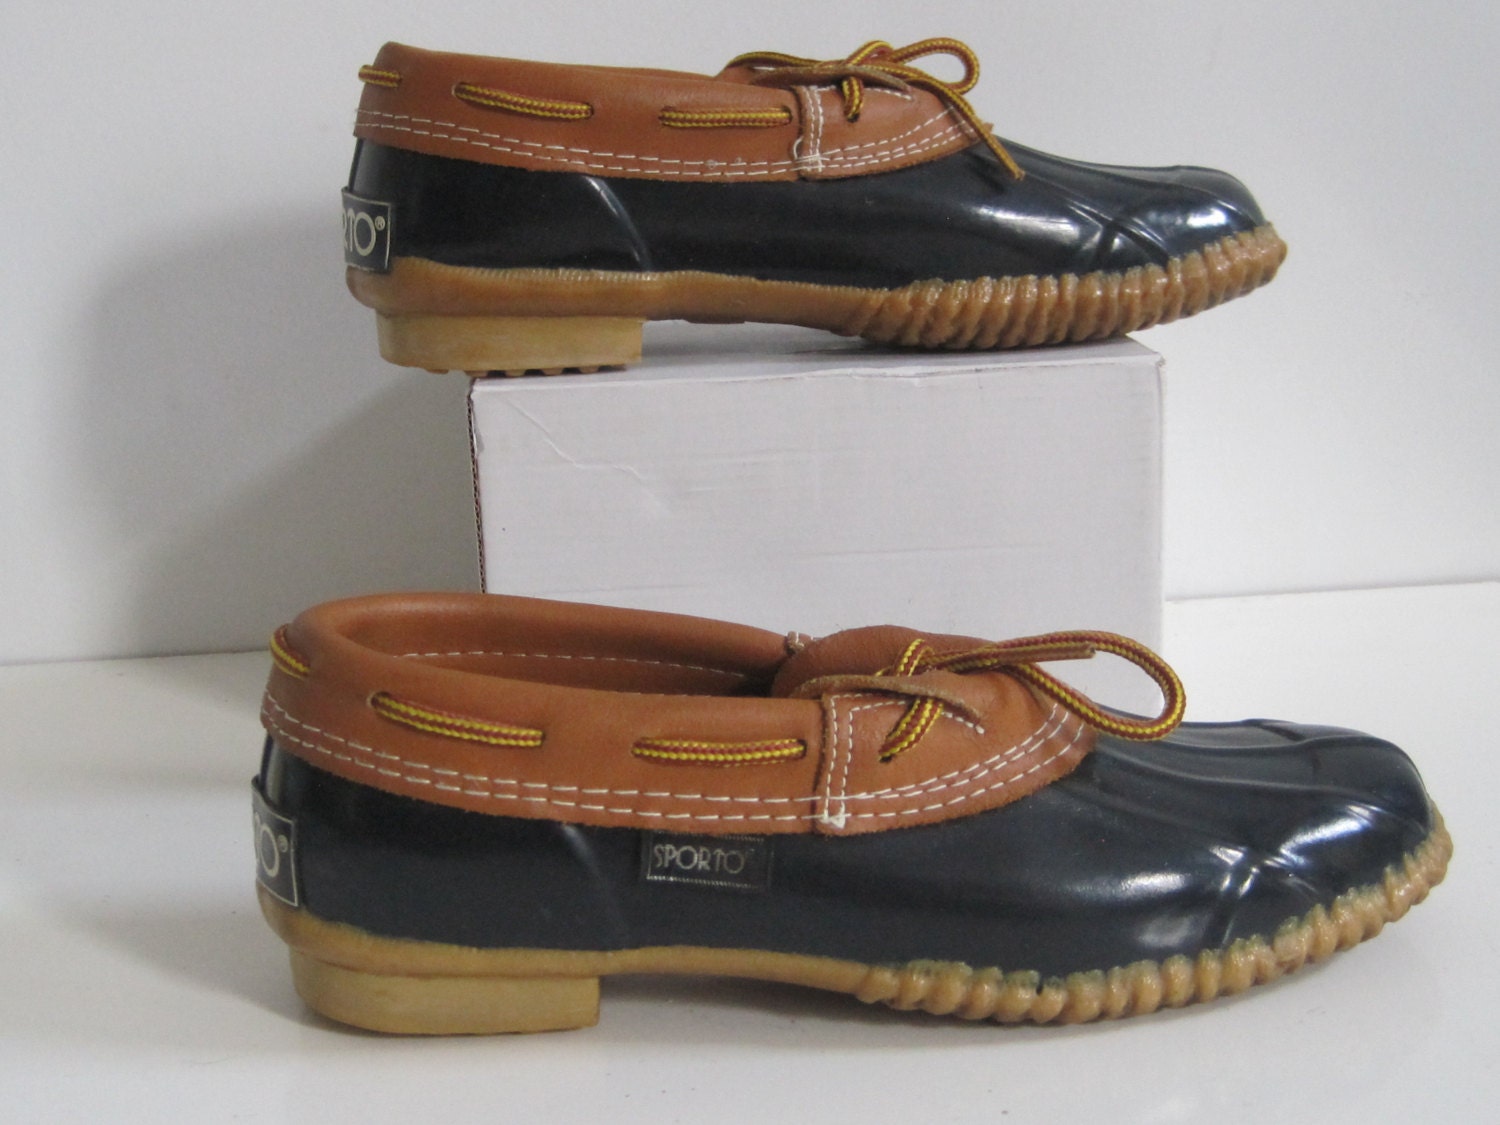 SPORTO Ankle Shoe Duck Boots Sz: 7 Womens Leather Rubber by Elsu76